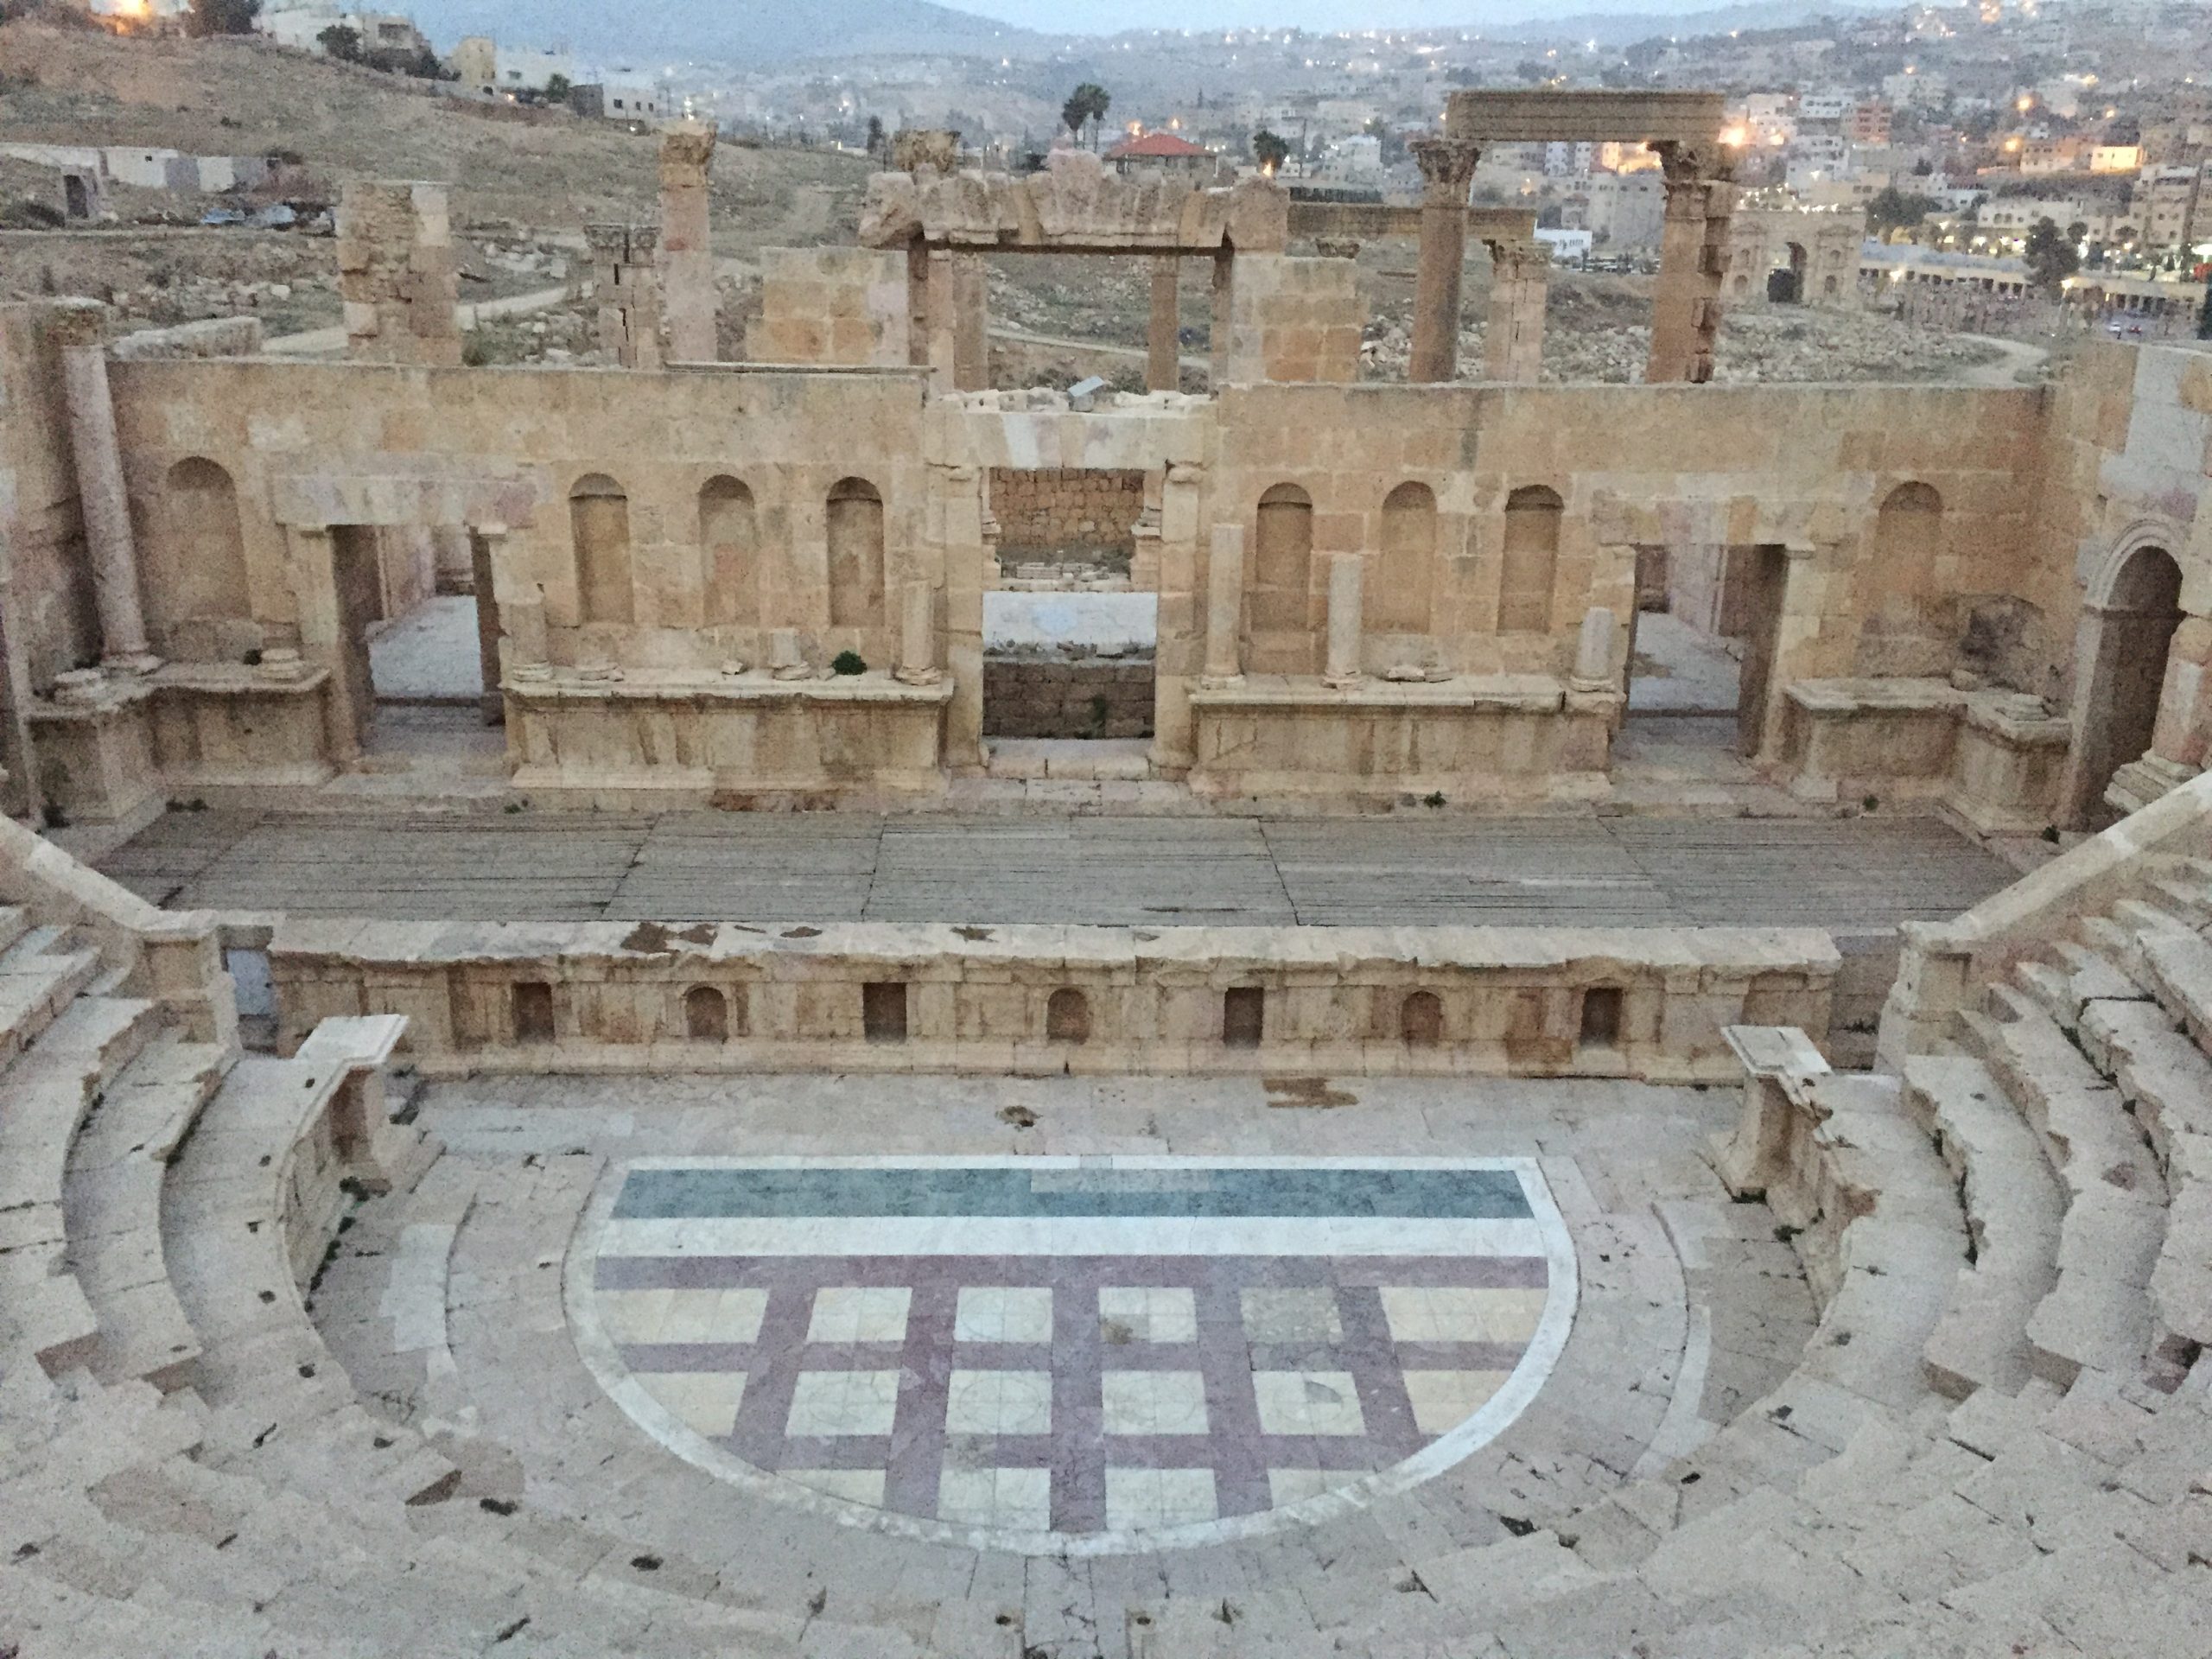 The Jerash Amphitheatre